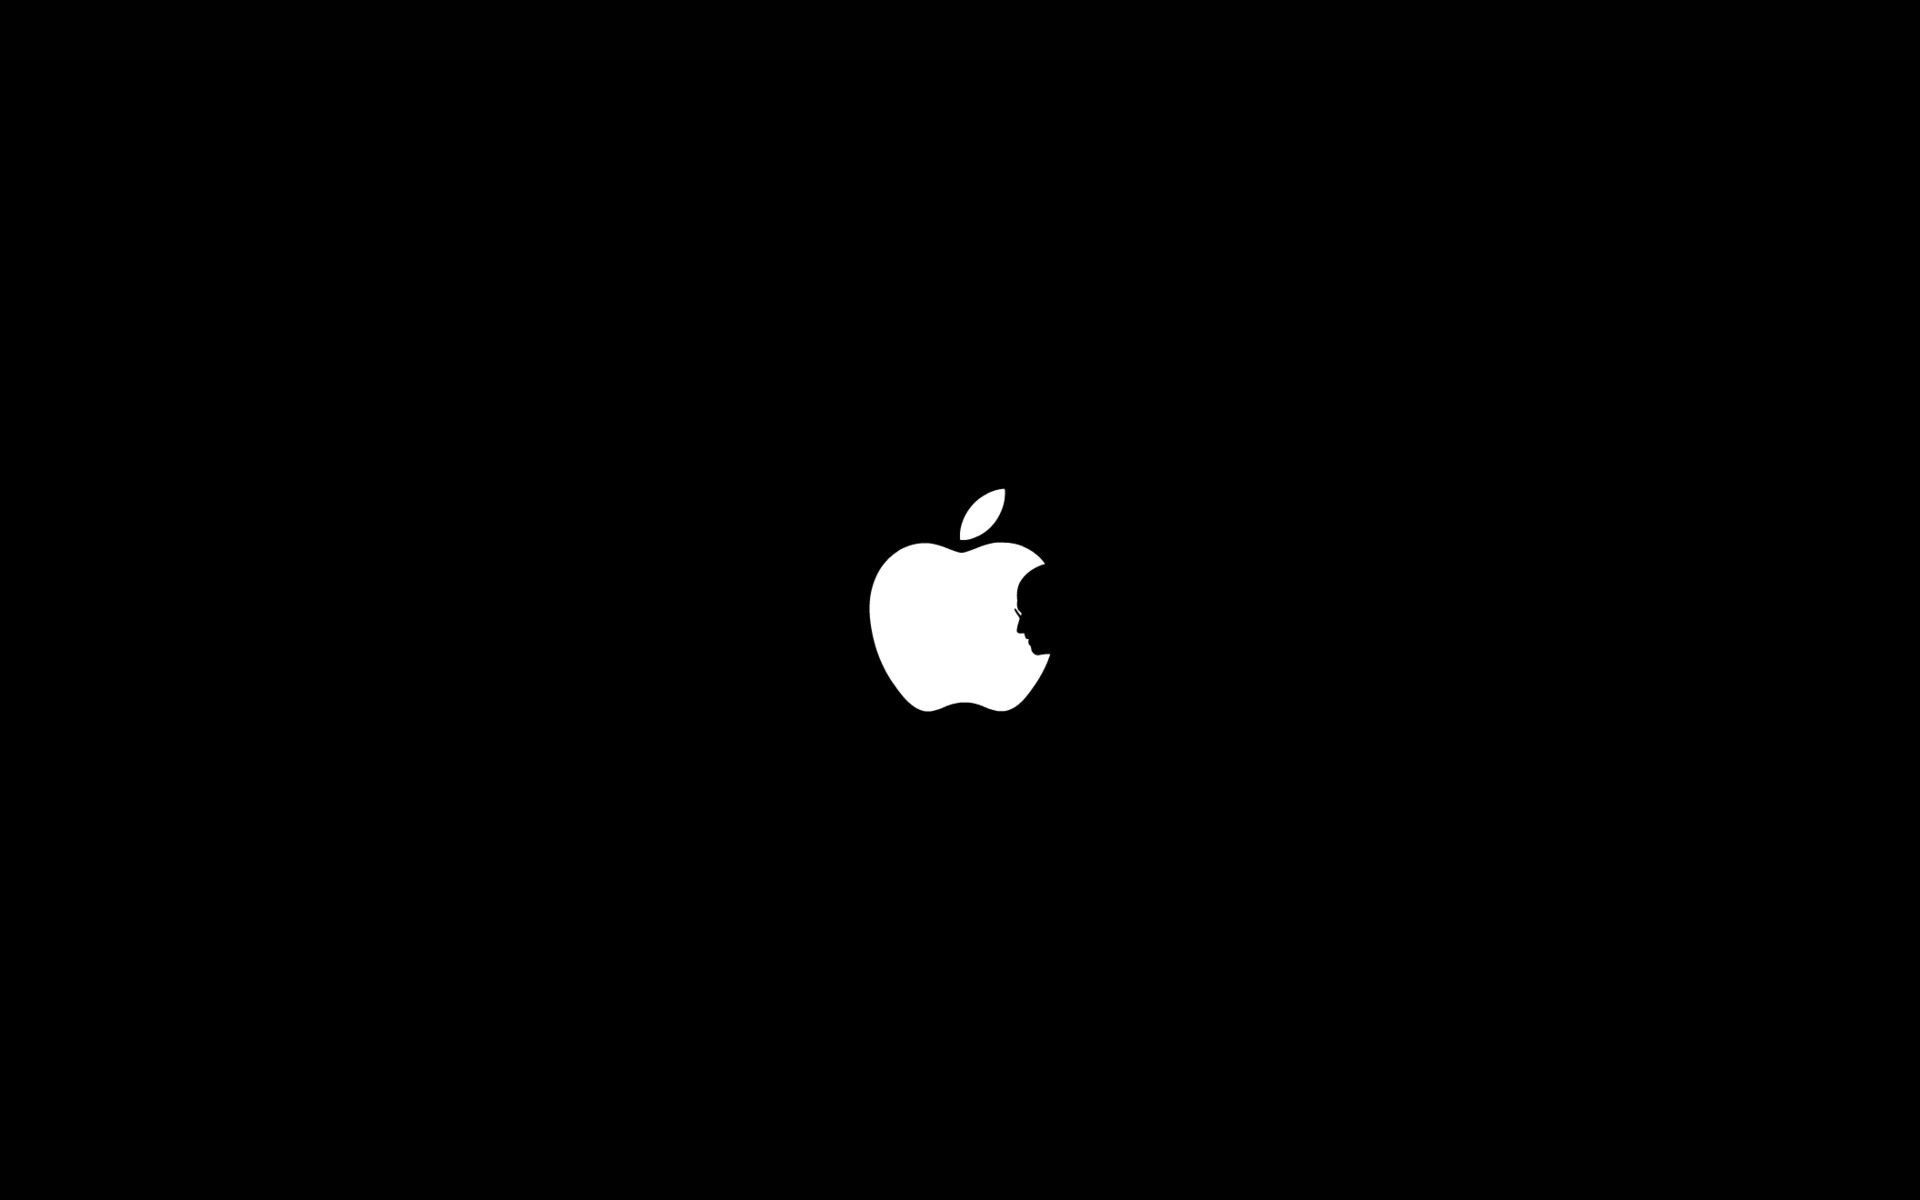 Mac and pc logo download free